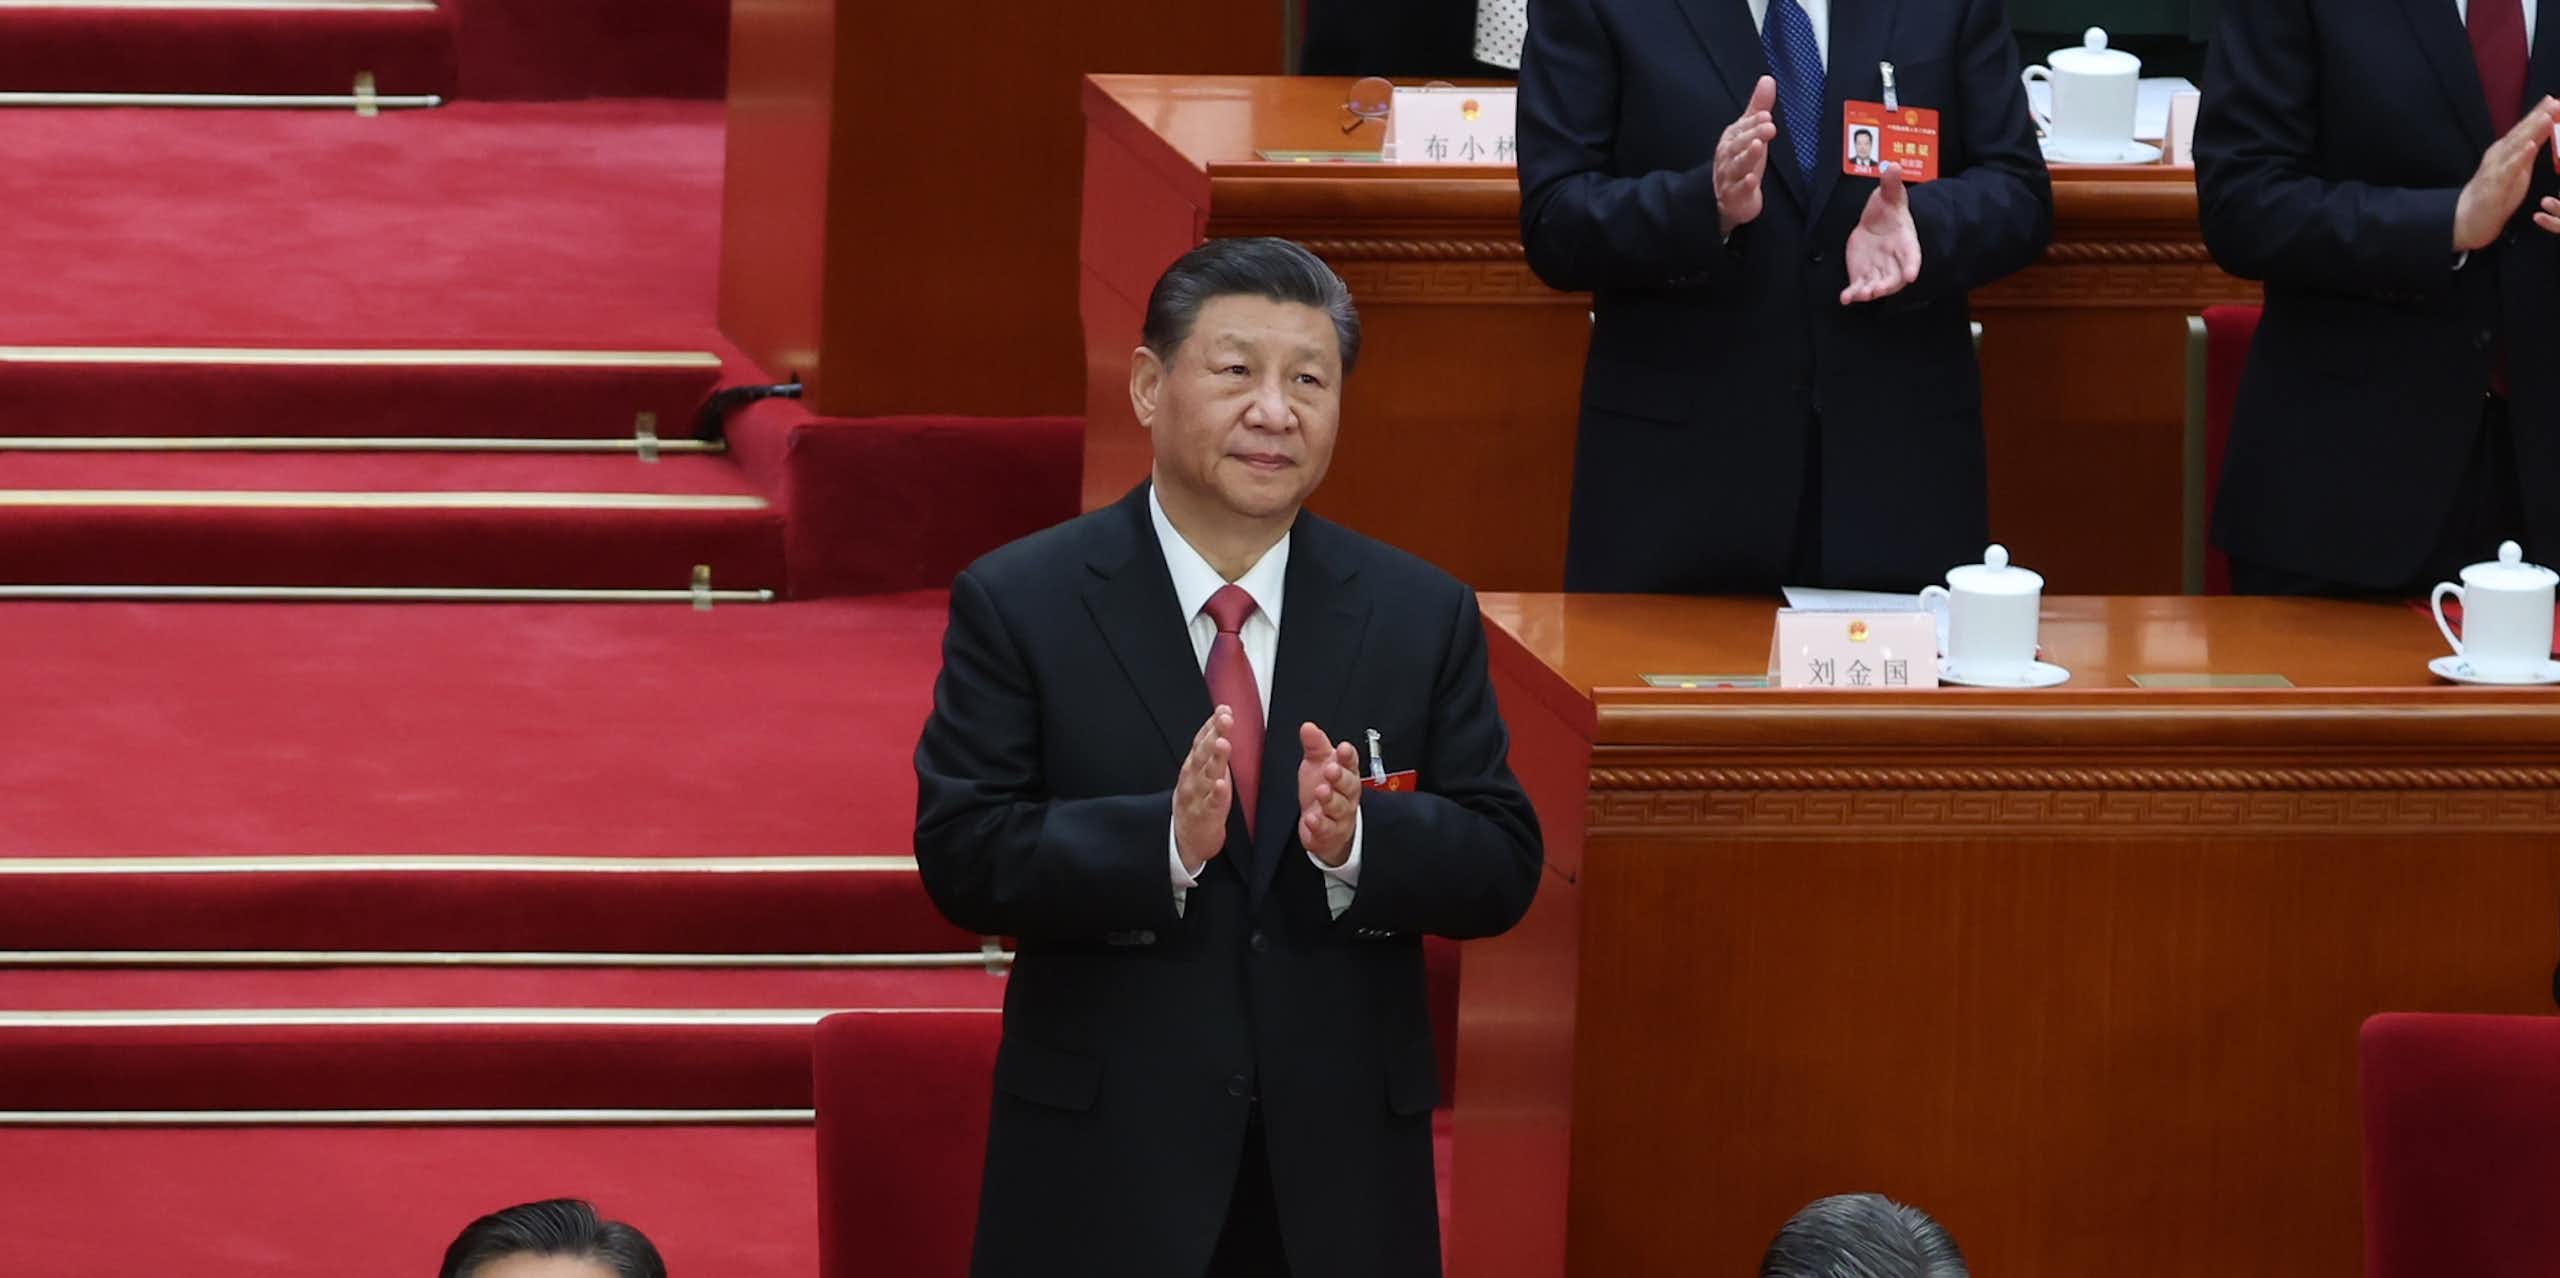 Xi Jinping stood beside a desk clapping.